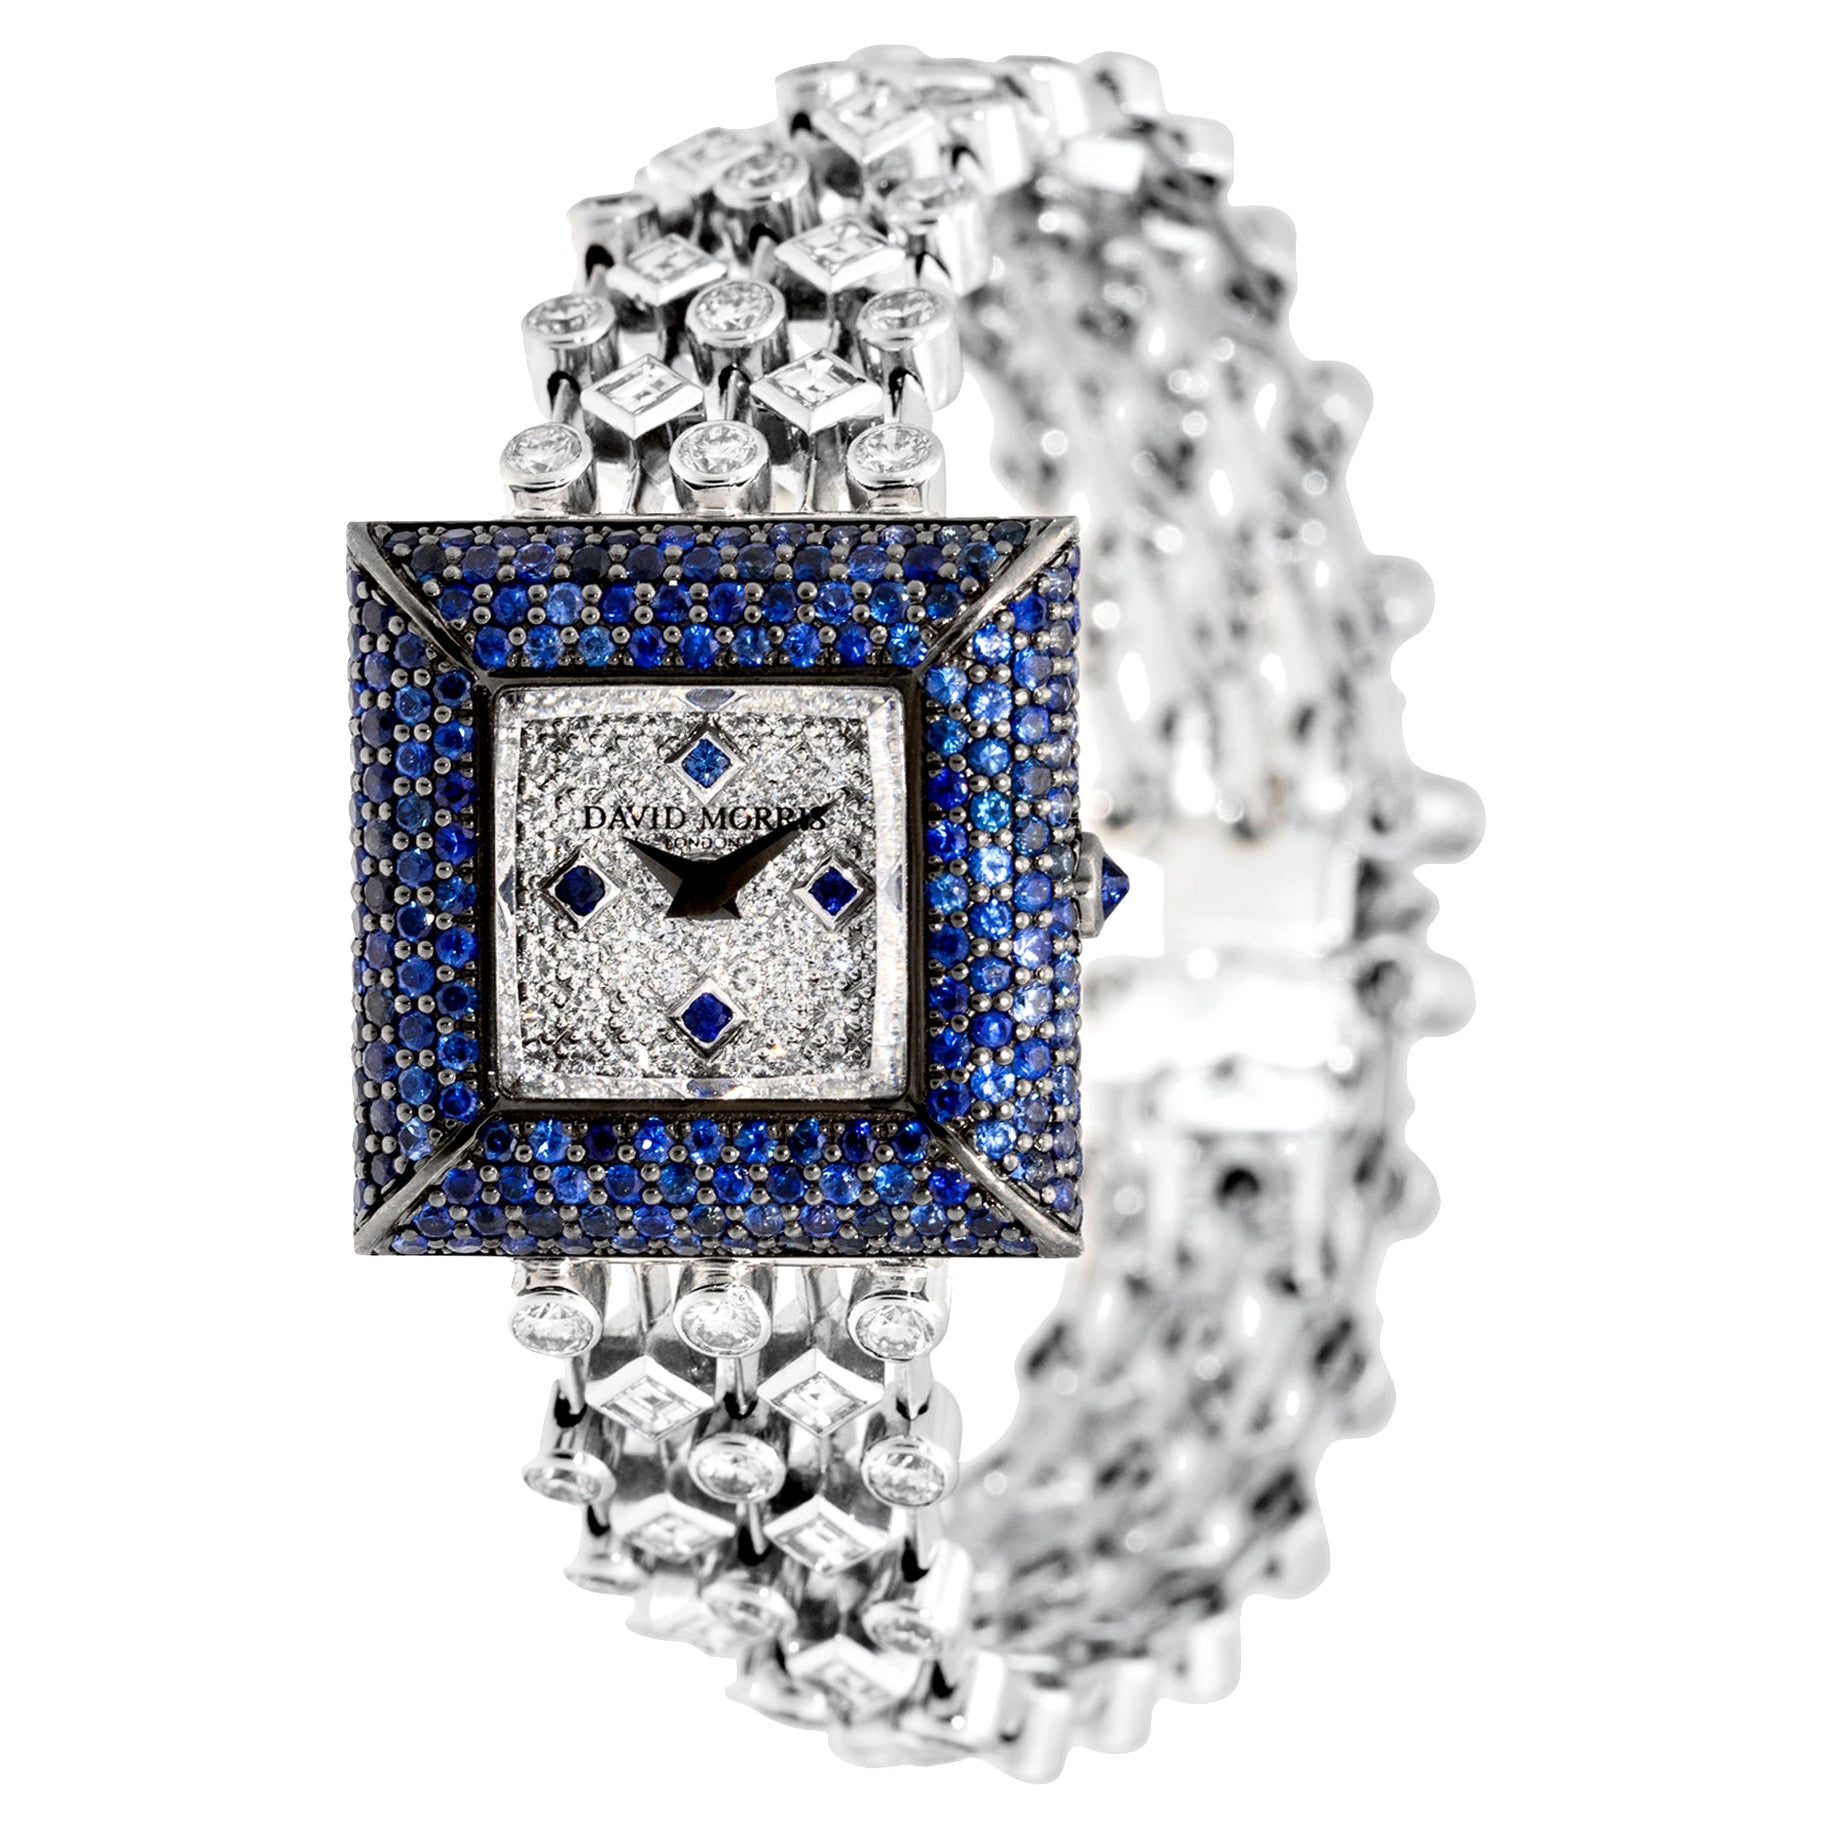 David Morris Blue Sapphire & White Diamond Jewellery Bracelet Watch